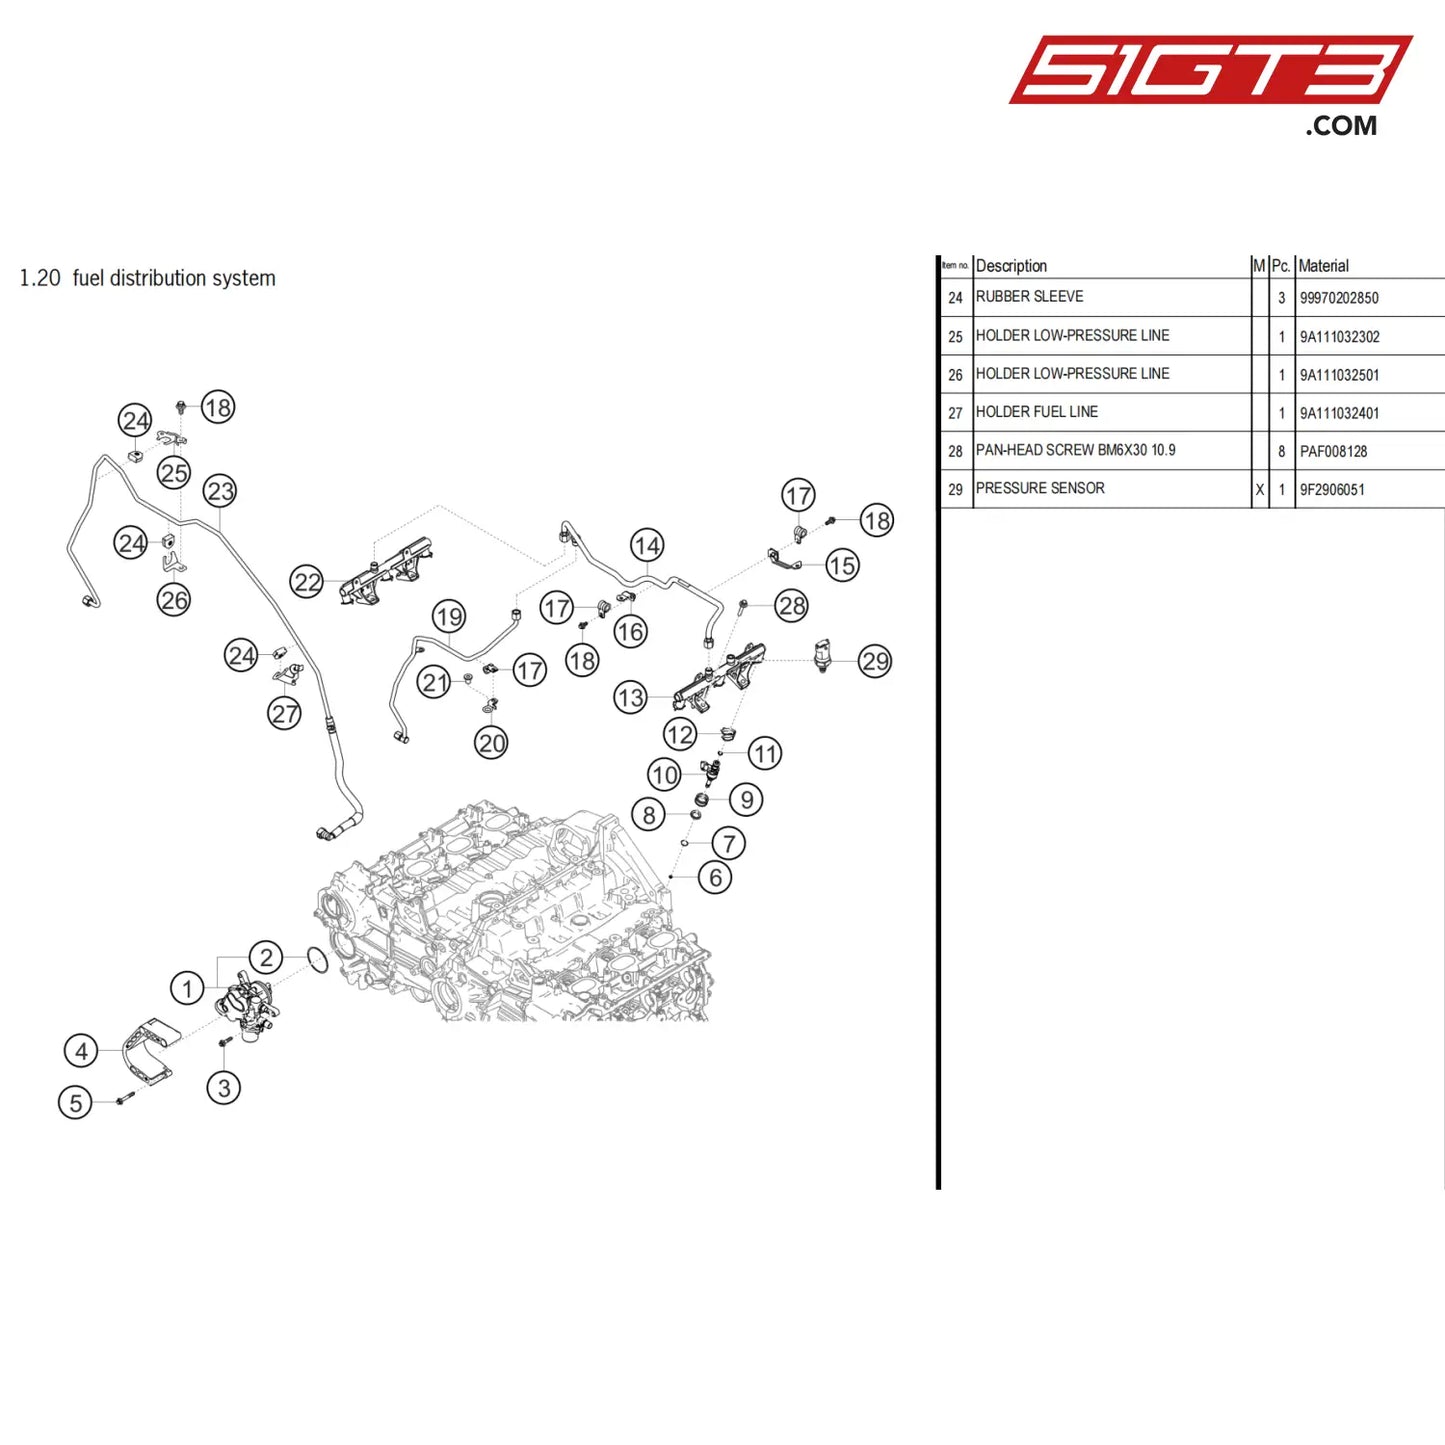 Holder High-Pressure Line - 9A111094702 [Porsche 718 Cayman Gt4 Clubsport] Fuel Distribution System